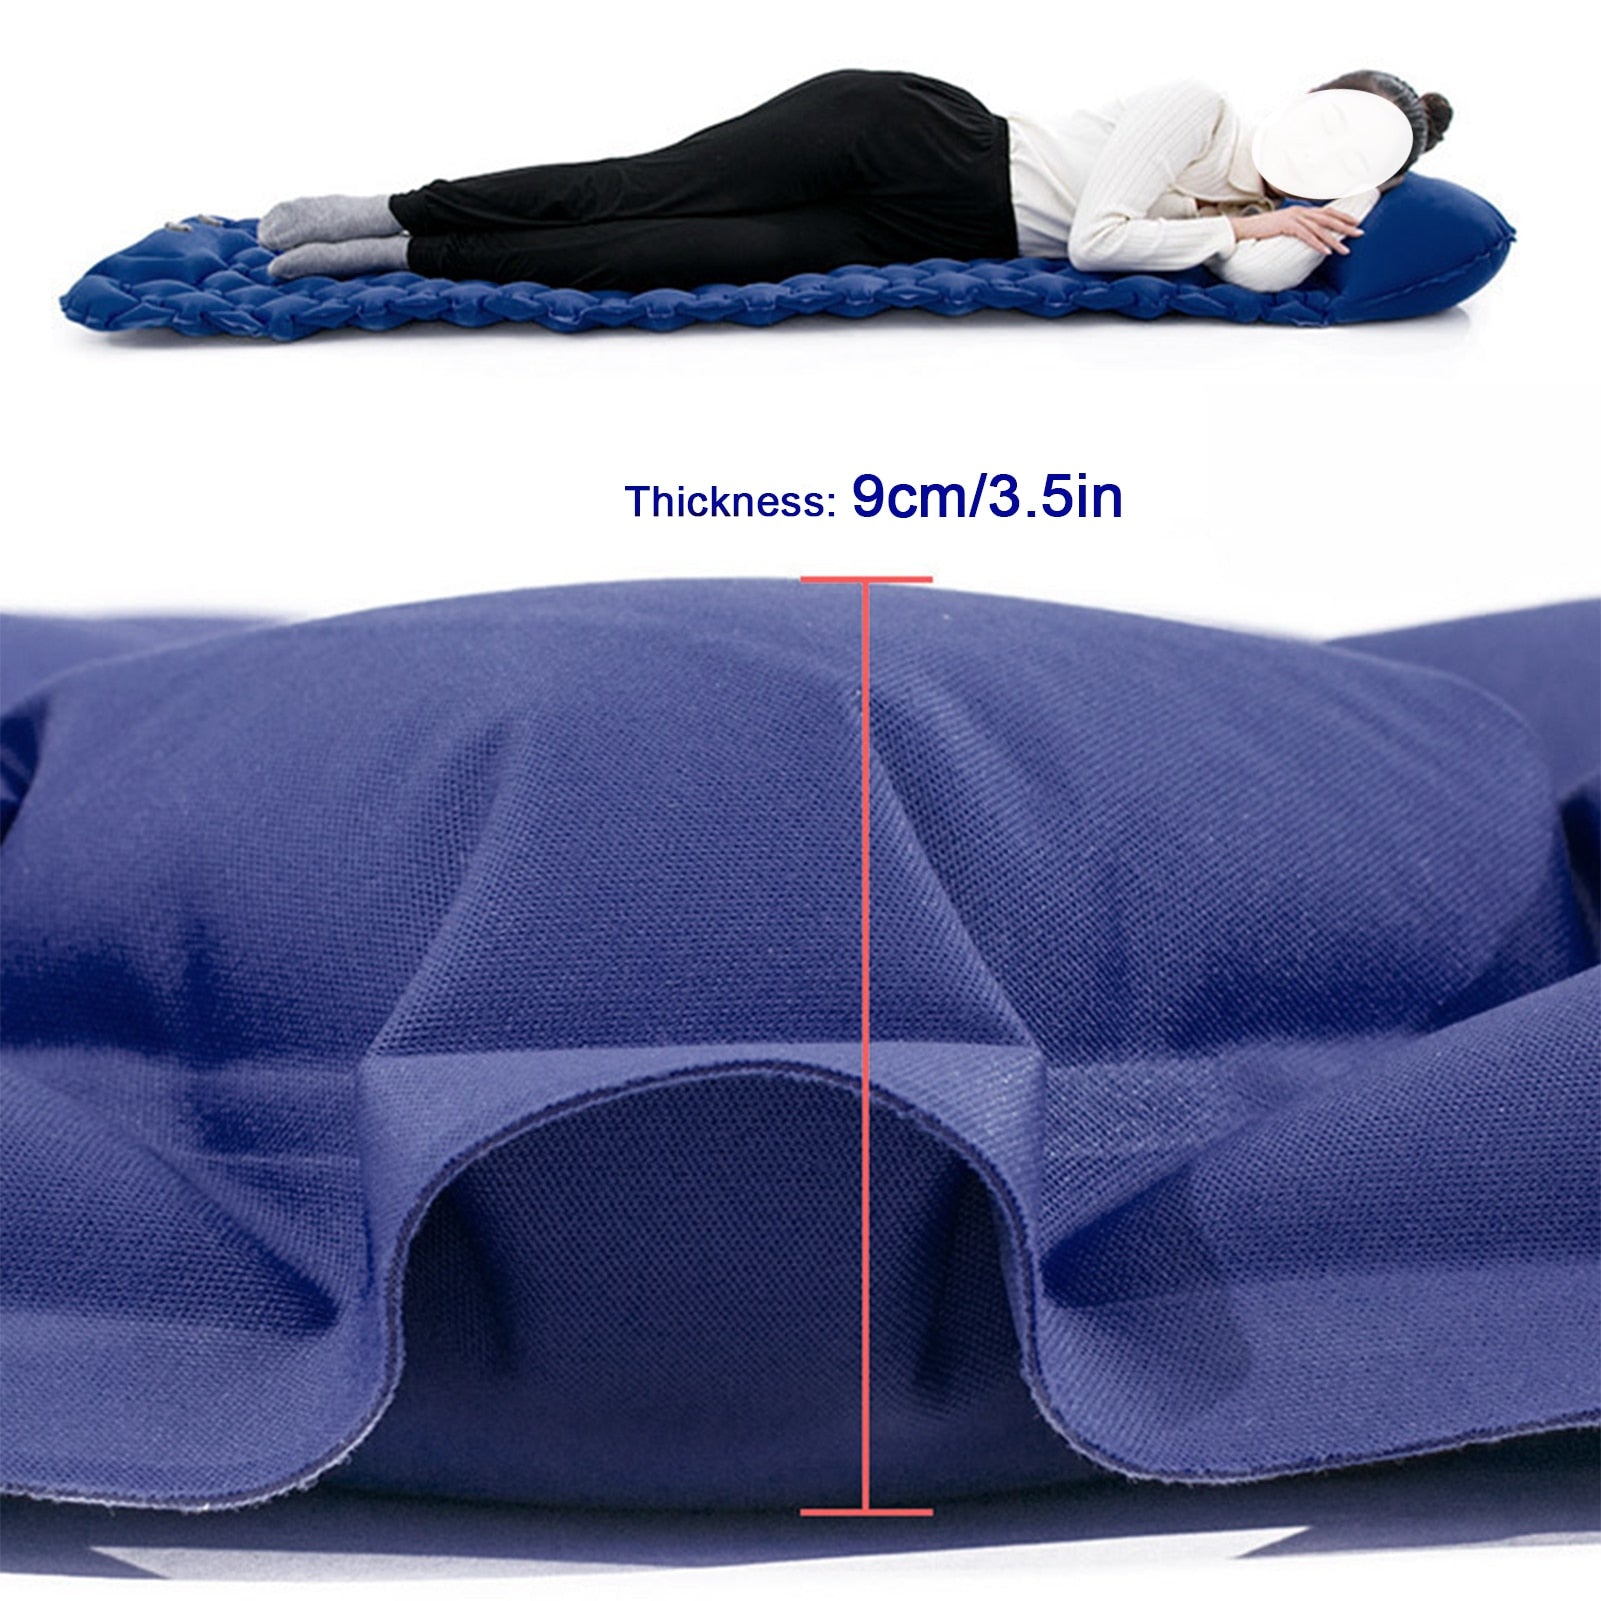 Tomshoo Inflatable Mattress 2 Person Camping Mat with Air Pillow Portable Air Mattress Waterproof Backpacking Sleeping Pad